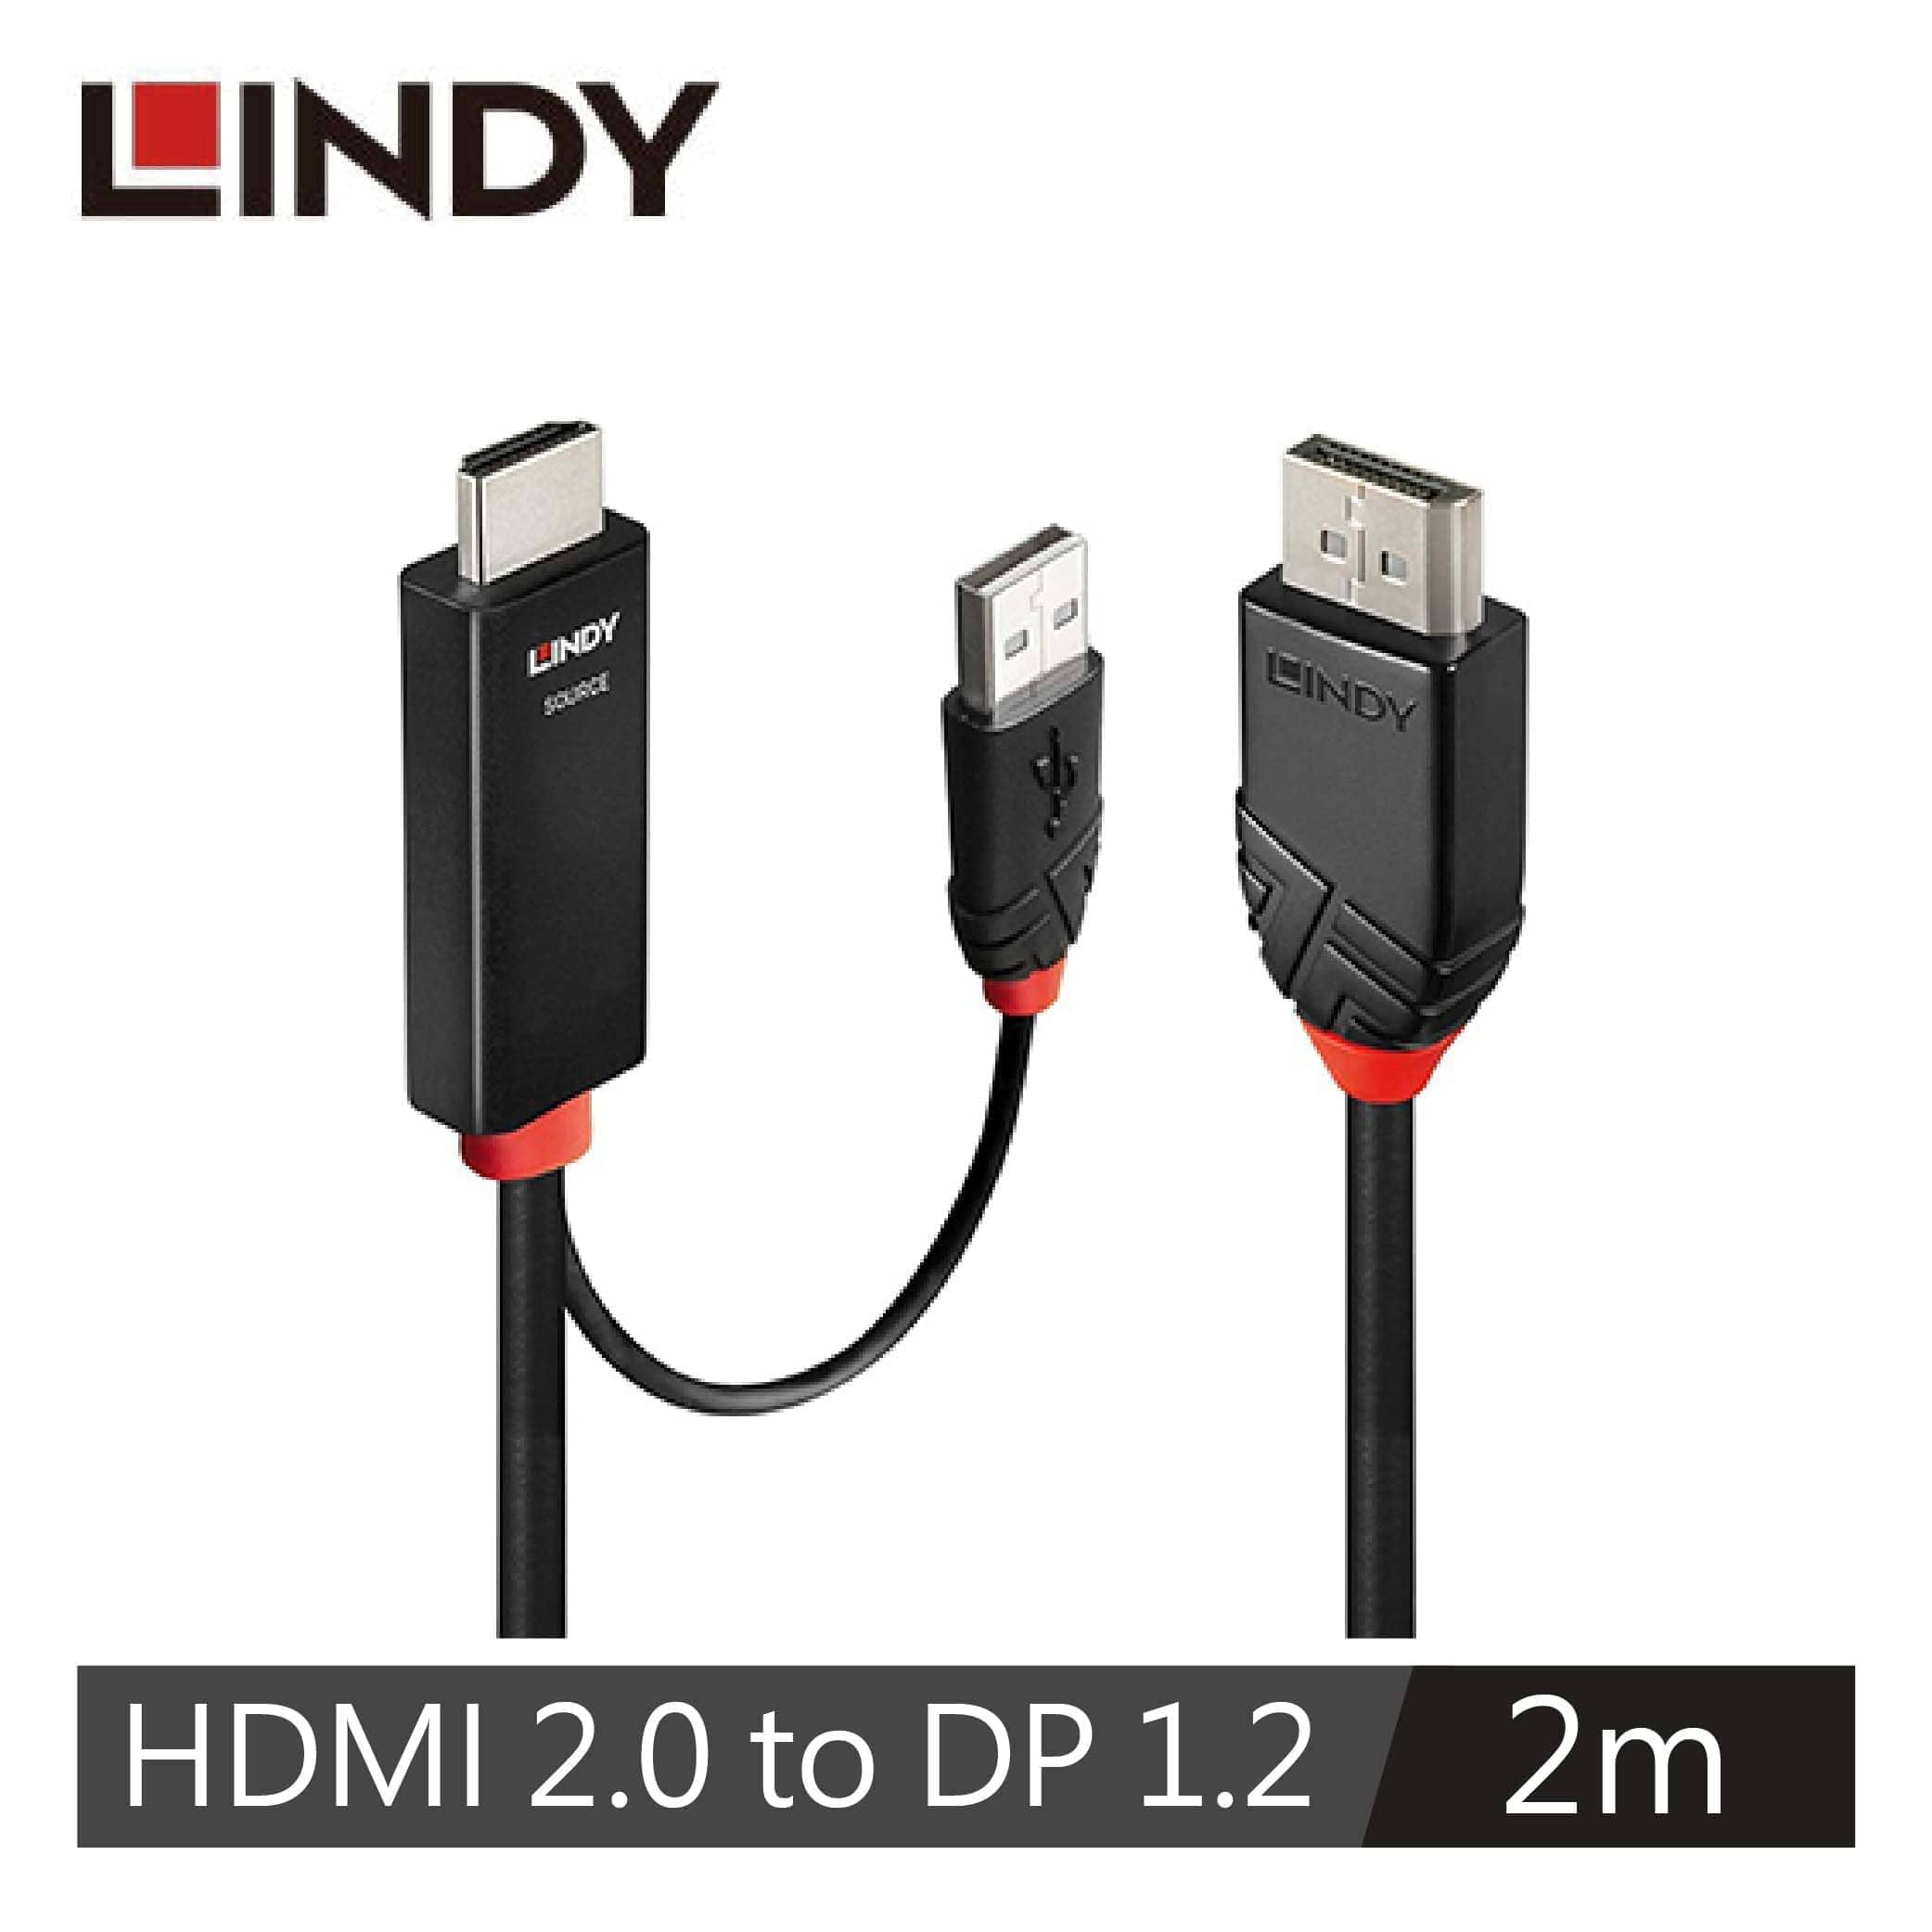 LINDY林帝 主動式HDMI2.0 TO DISPLAYPORT1.2 帶USB電源轉接線, 2M